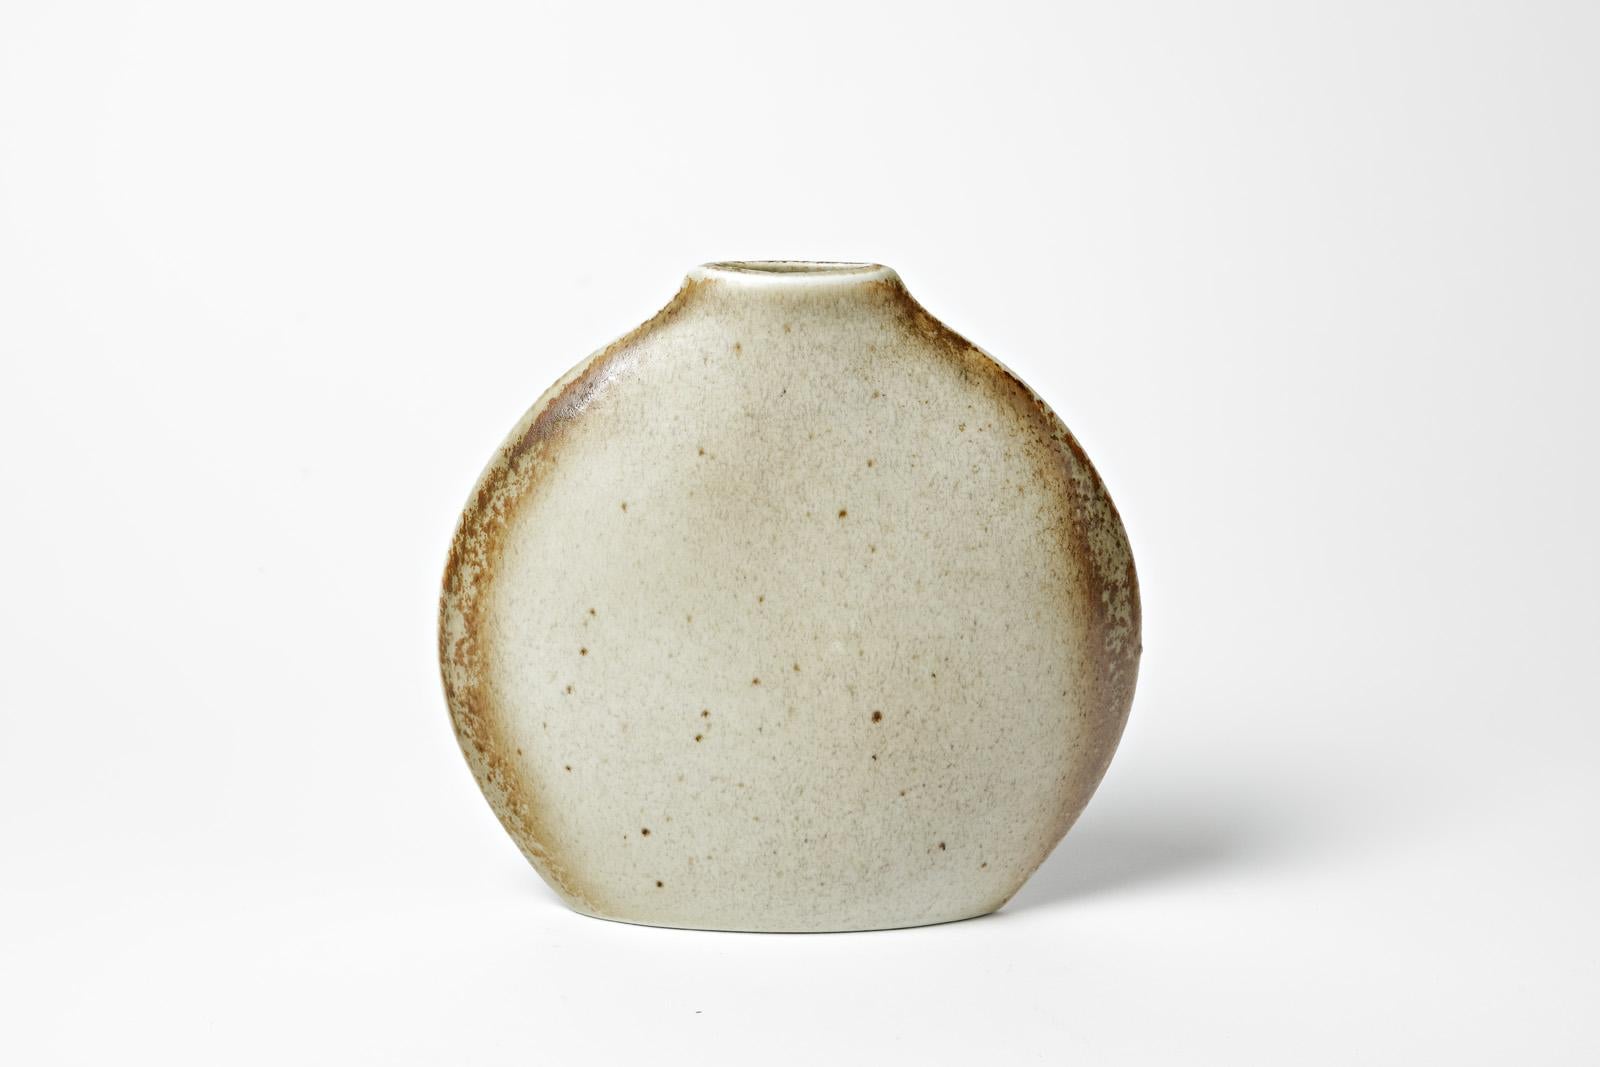 Benoit Montreau - Virebent Edition

20th mid century porcelain ceramic vase

Grey and brown ceramic glazes colors

Singed under the base

Original perfect condition

Height 17 cm
Large 17 cm.